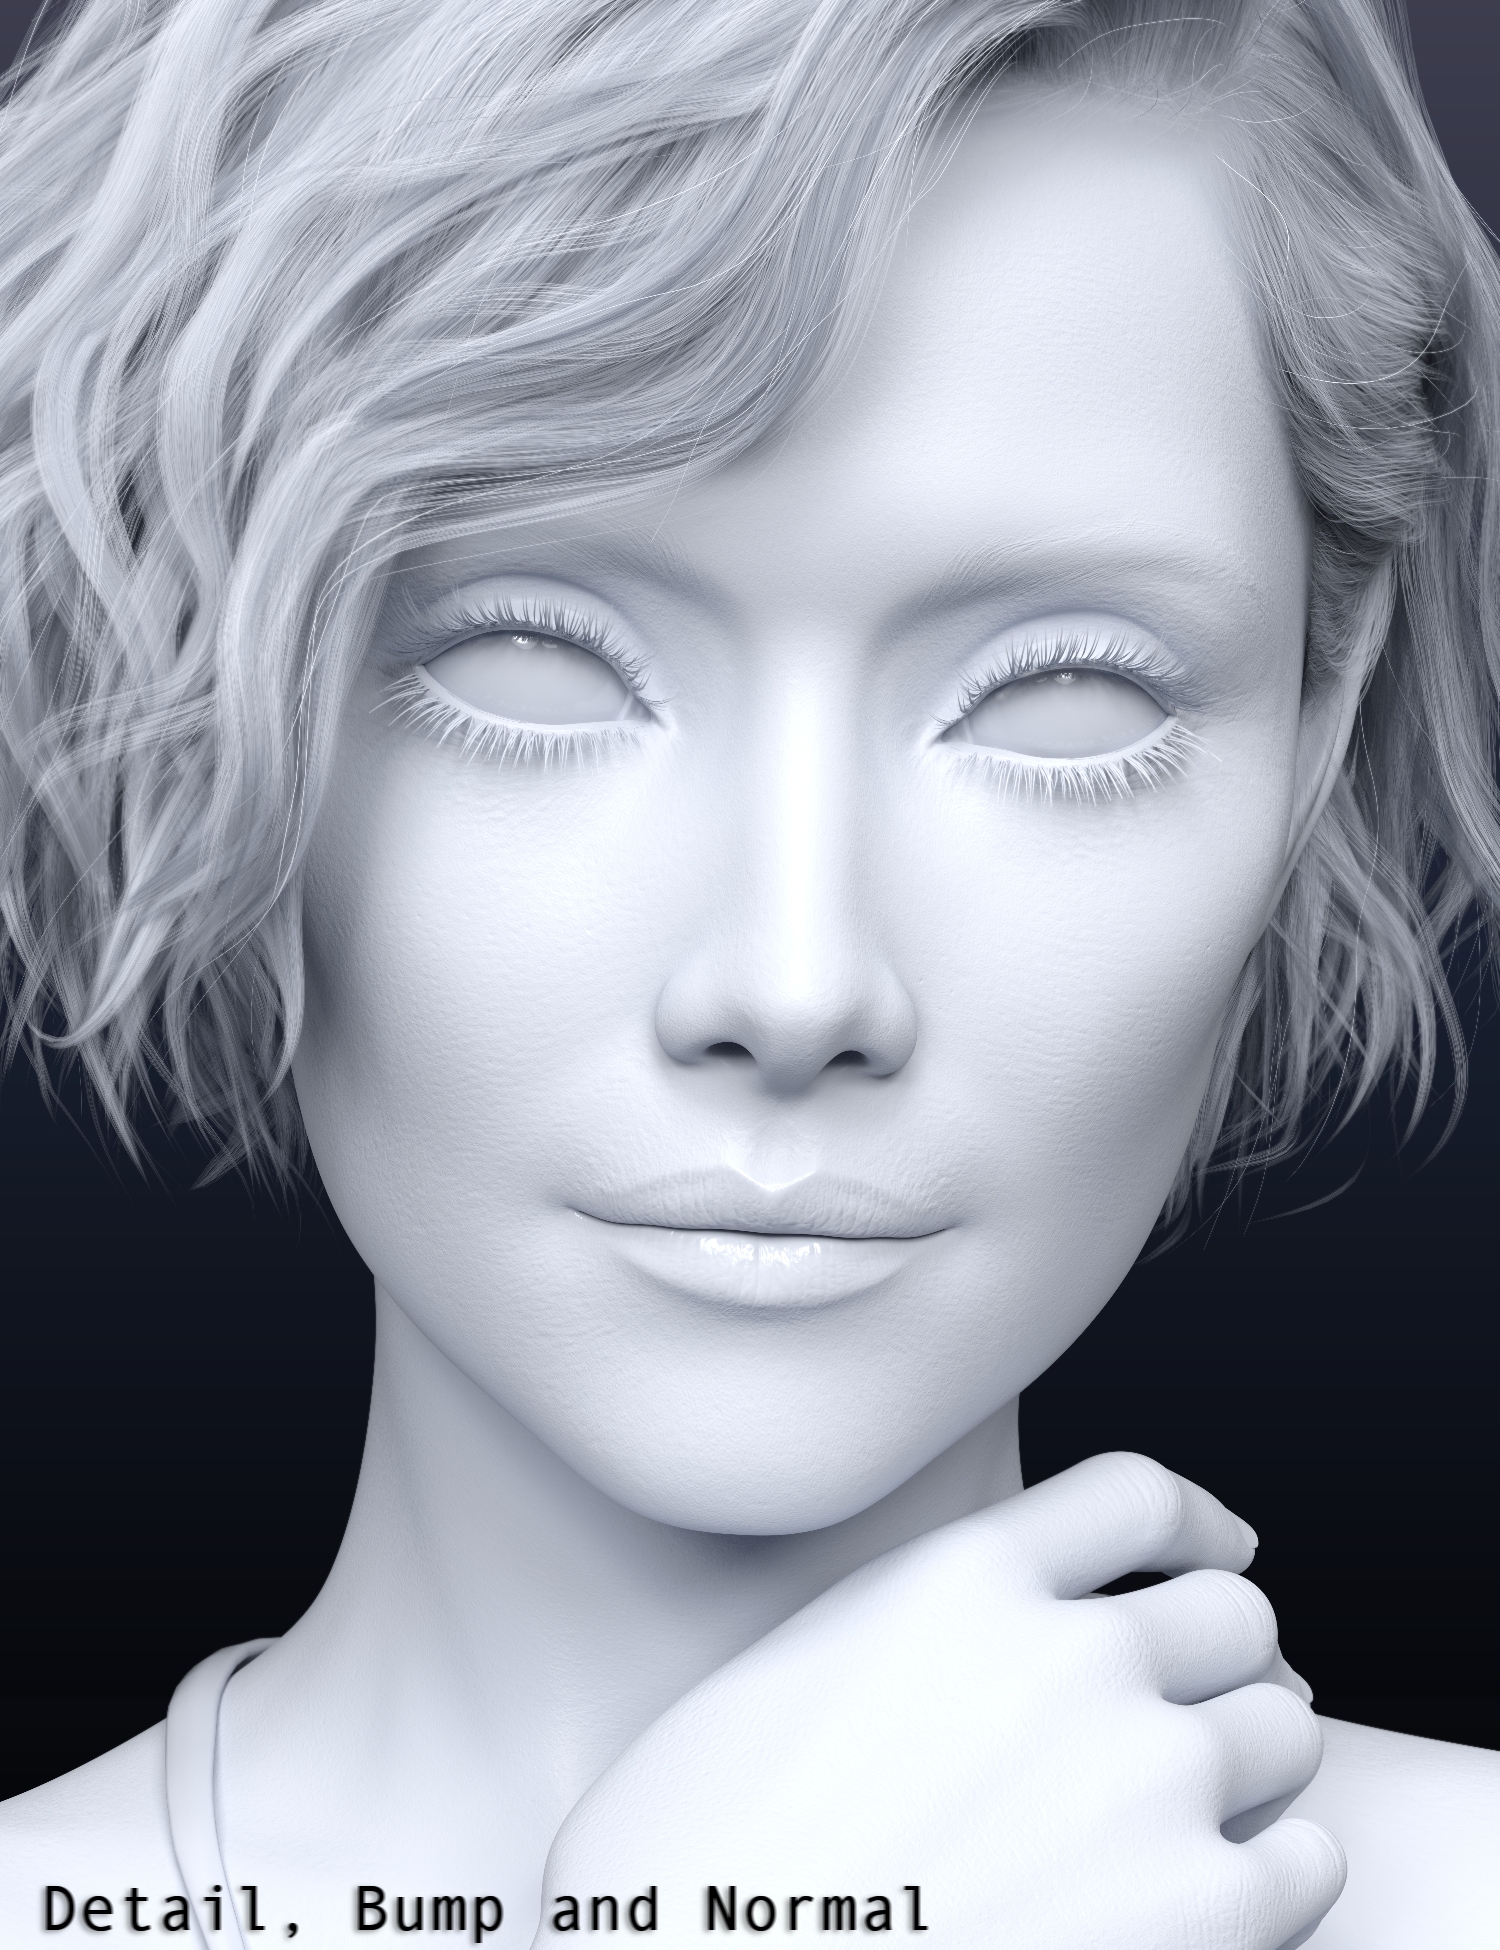 HS Storm for Genesis 8.1 Female by: Handspan Studios, 3D Models by Daz 3D